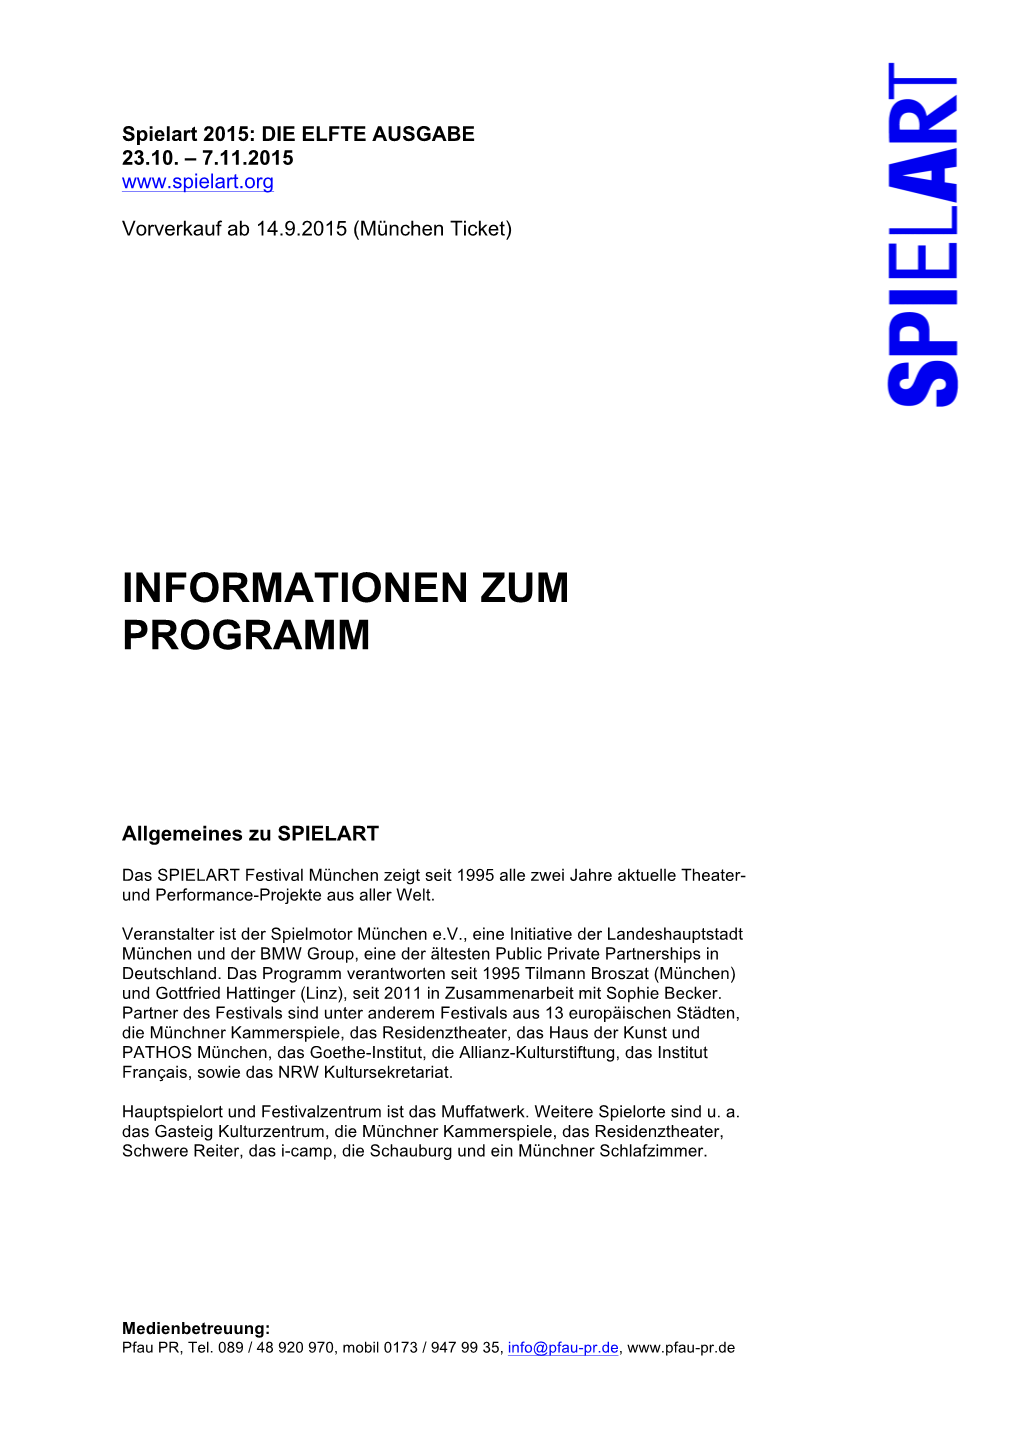 SPIELART 2015 Programminformationen